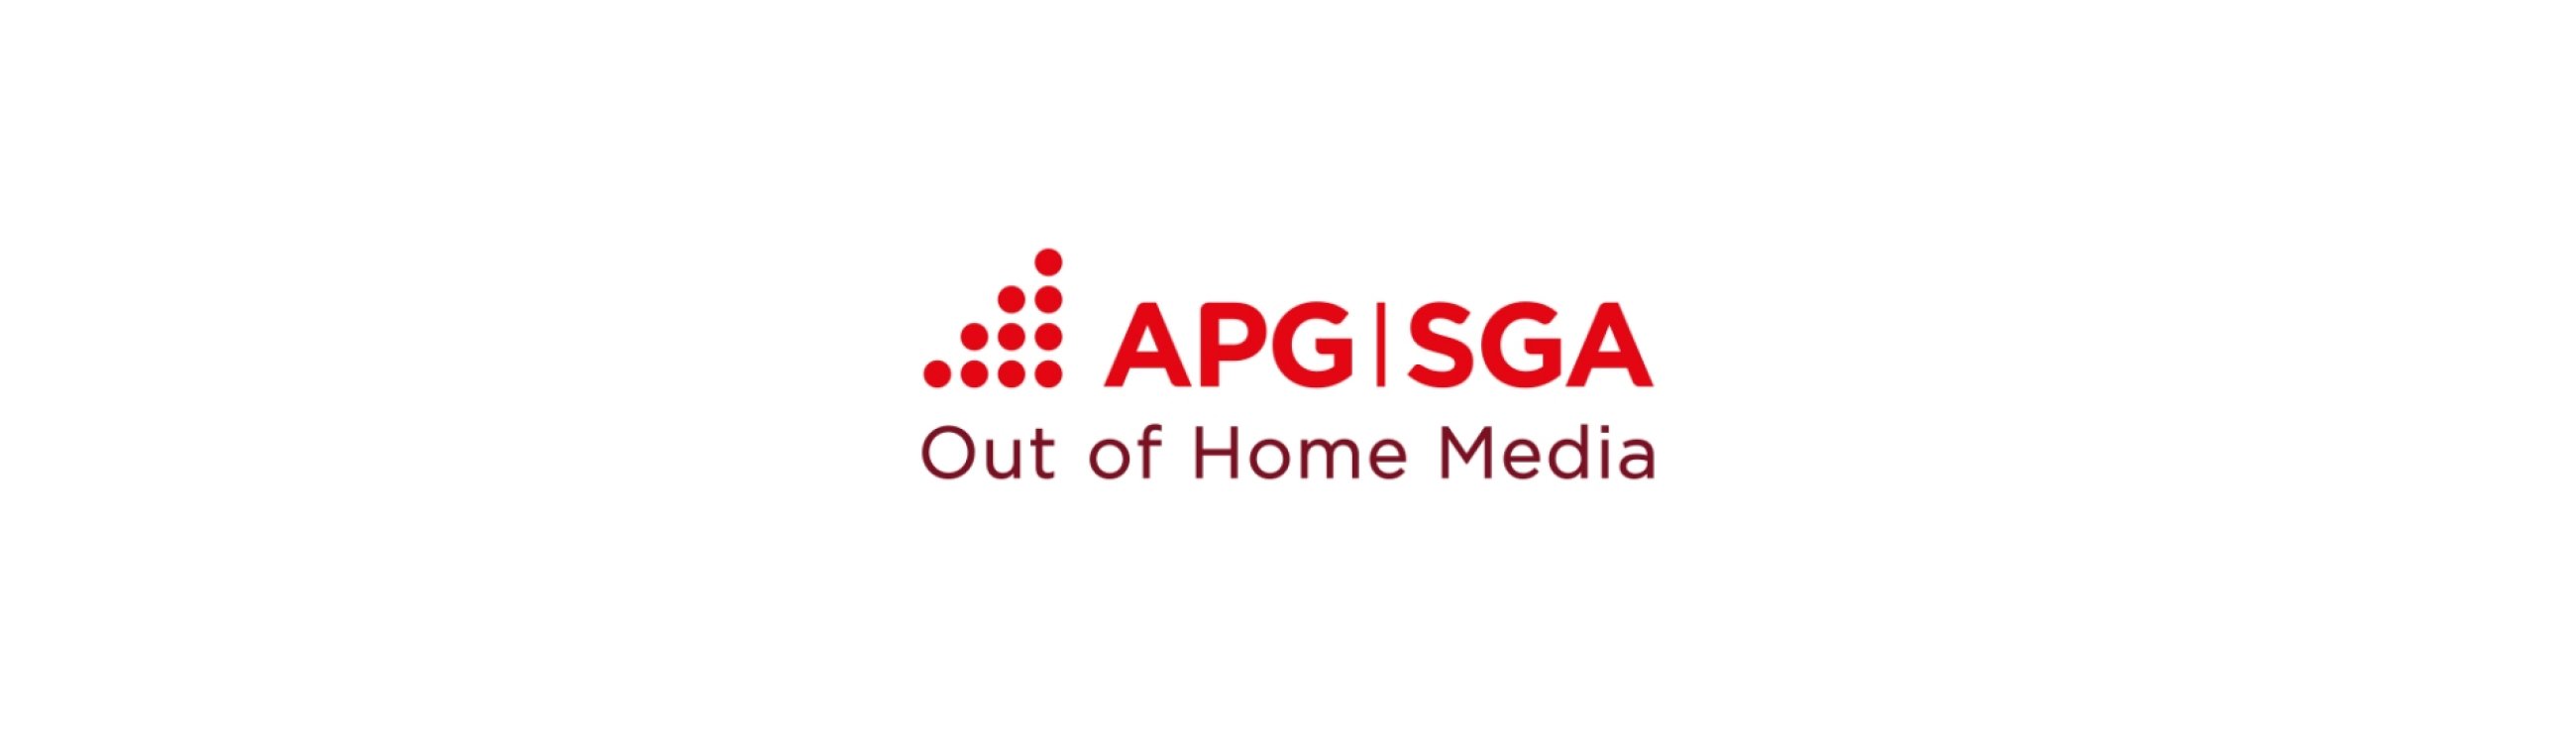 Logo-APG-SGA-Out-of-Home-Media-farbig-cmyk